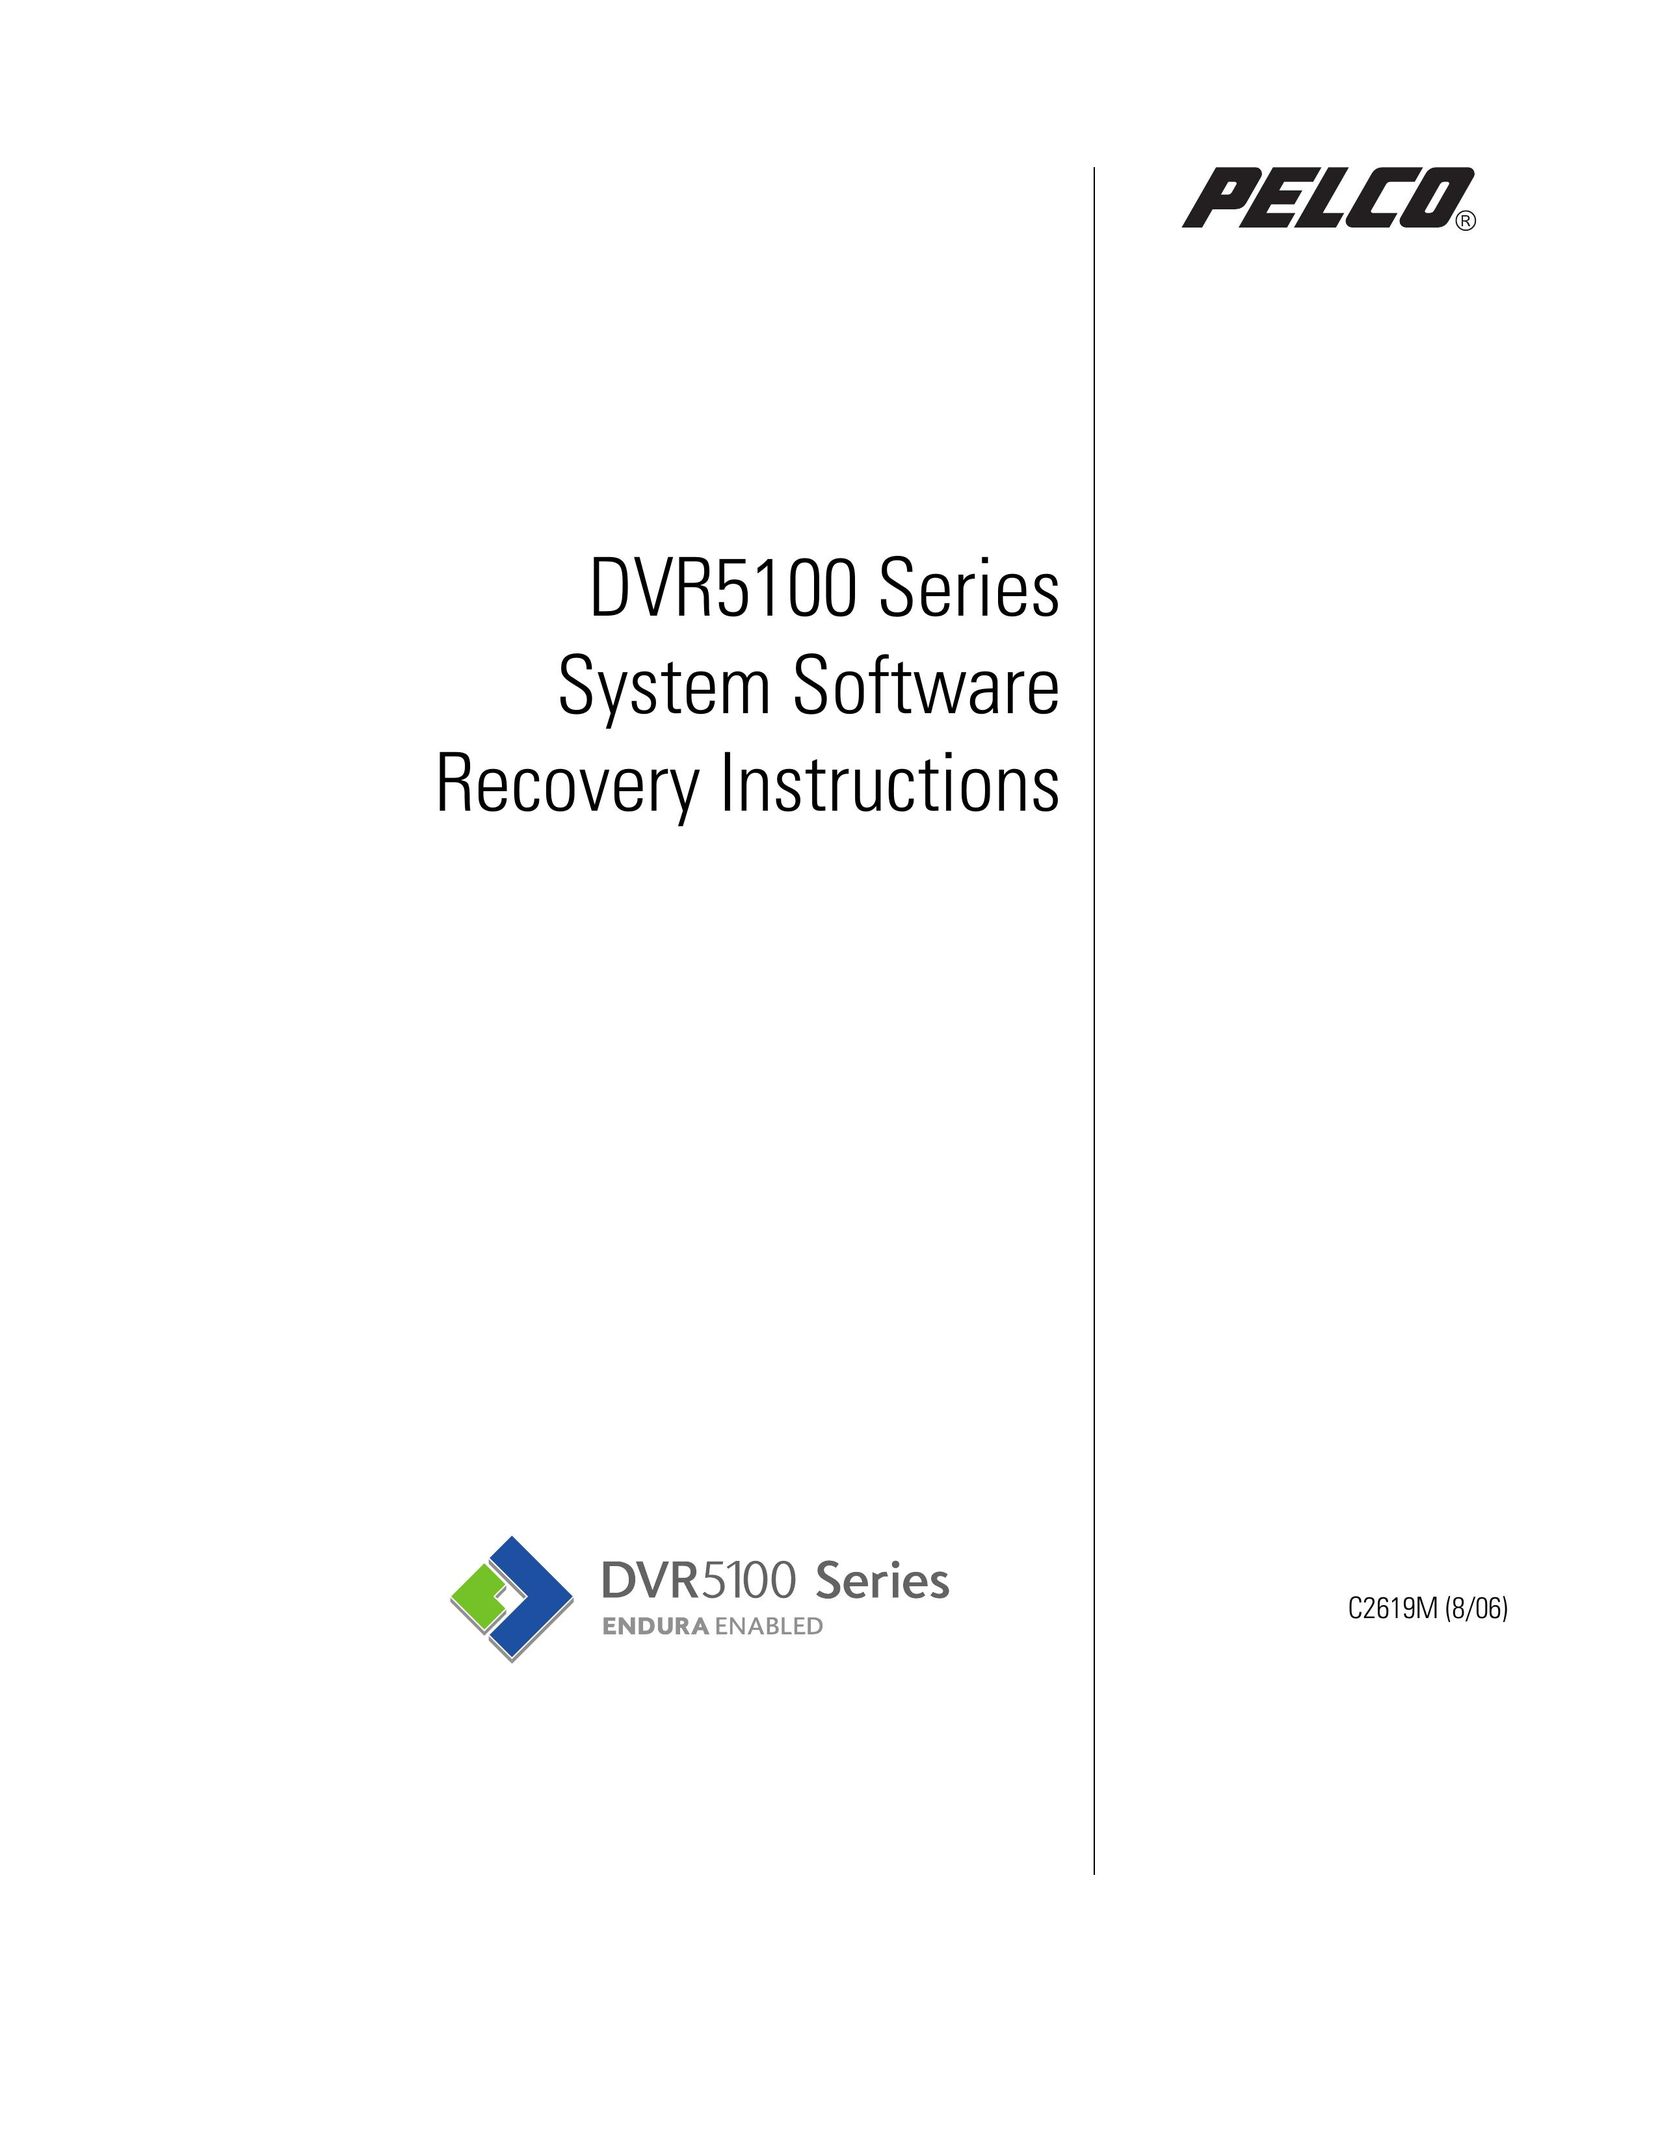 Pelco DVR5100 Series Whiteboard Accessories User Manual